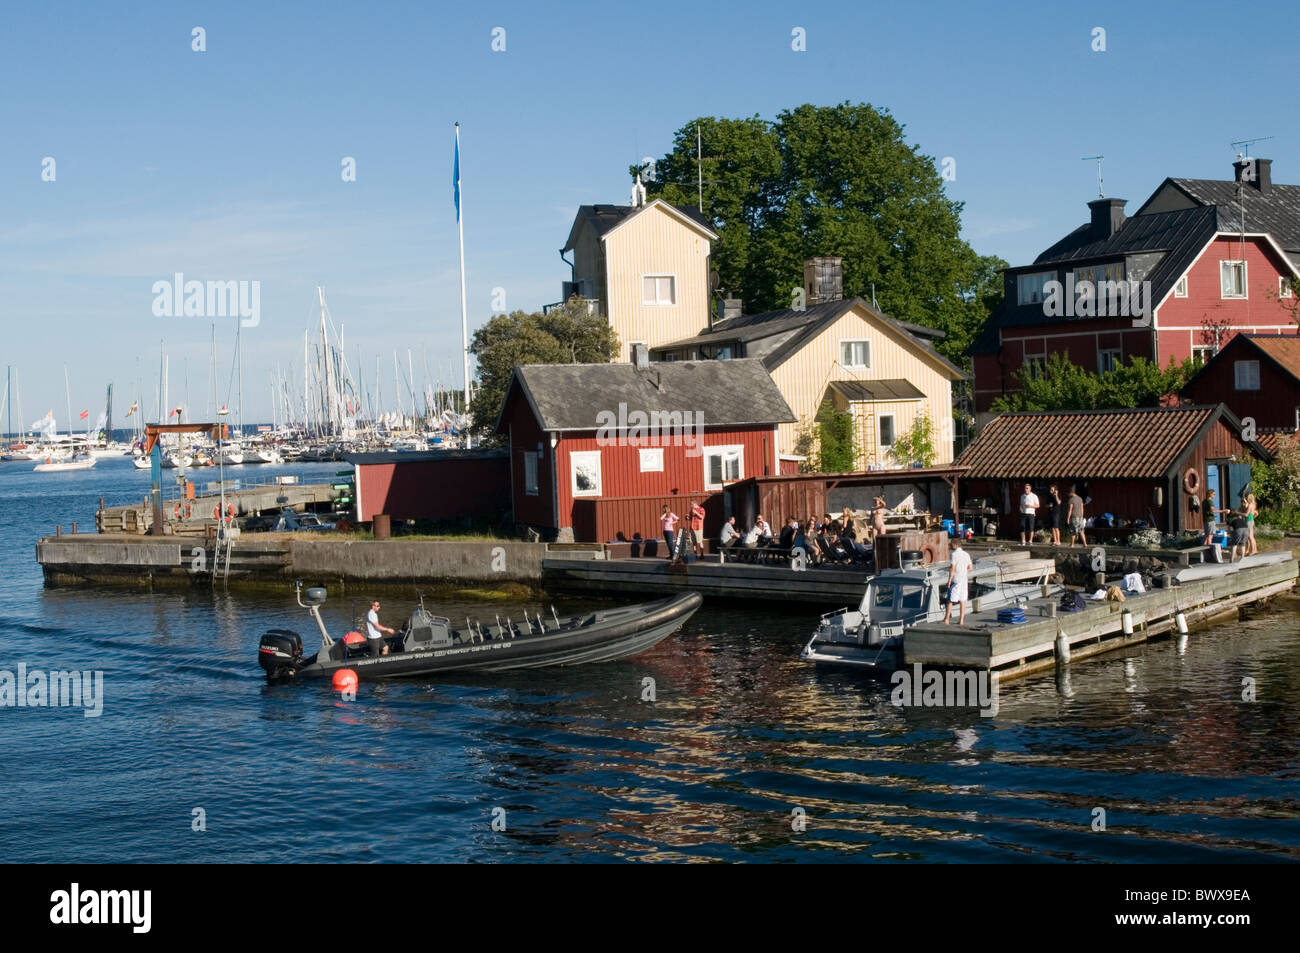 sandham-swedish-archipelago-archipelagos-sweden-stockholm-island-islands-BWX9EA.jpg